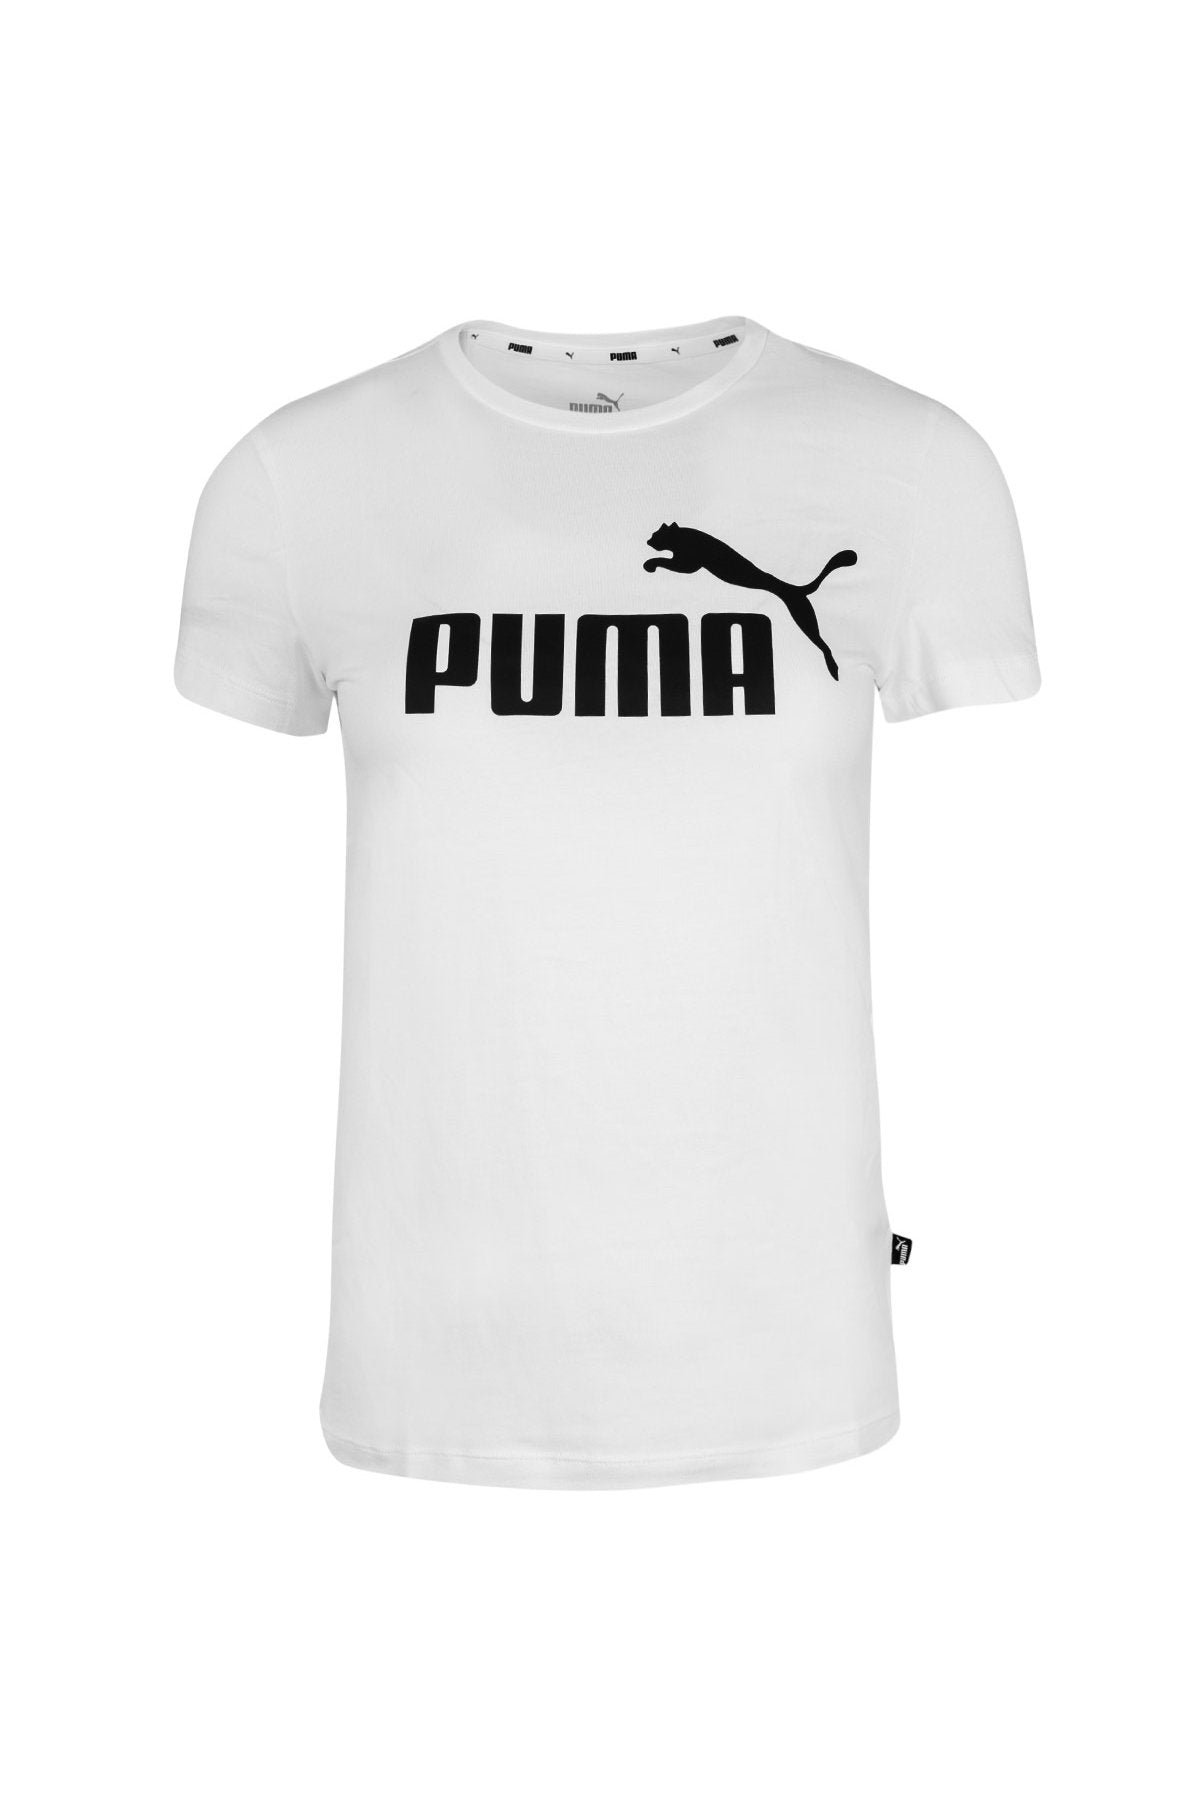 Puma 586774-02